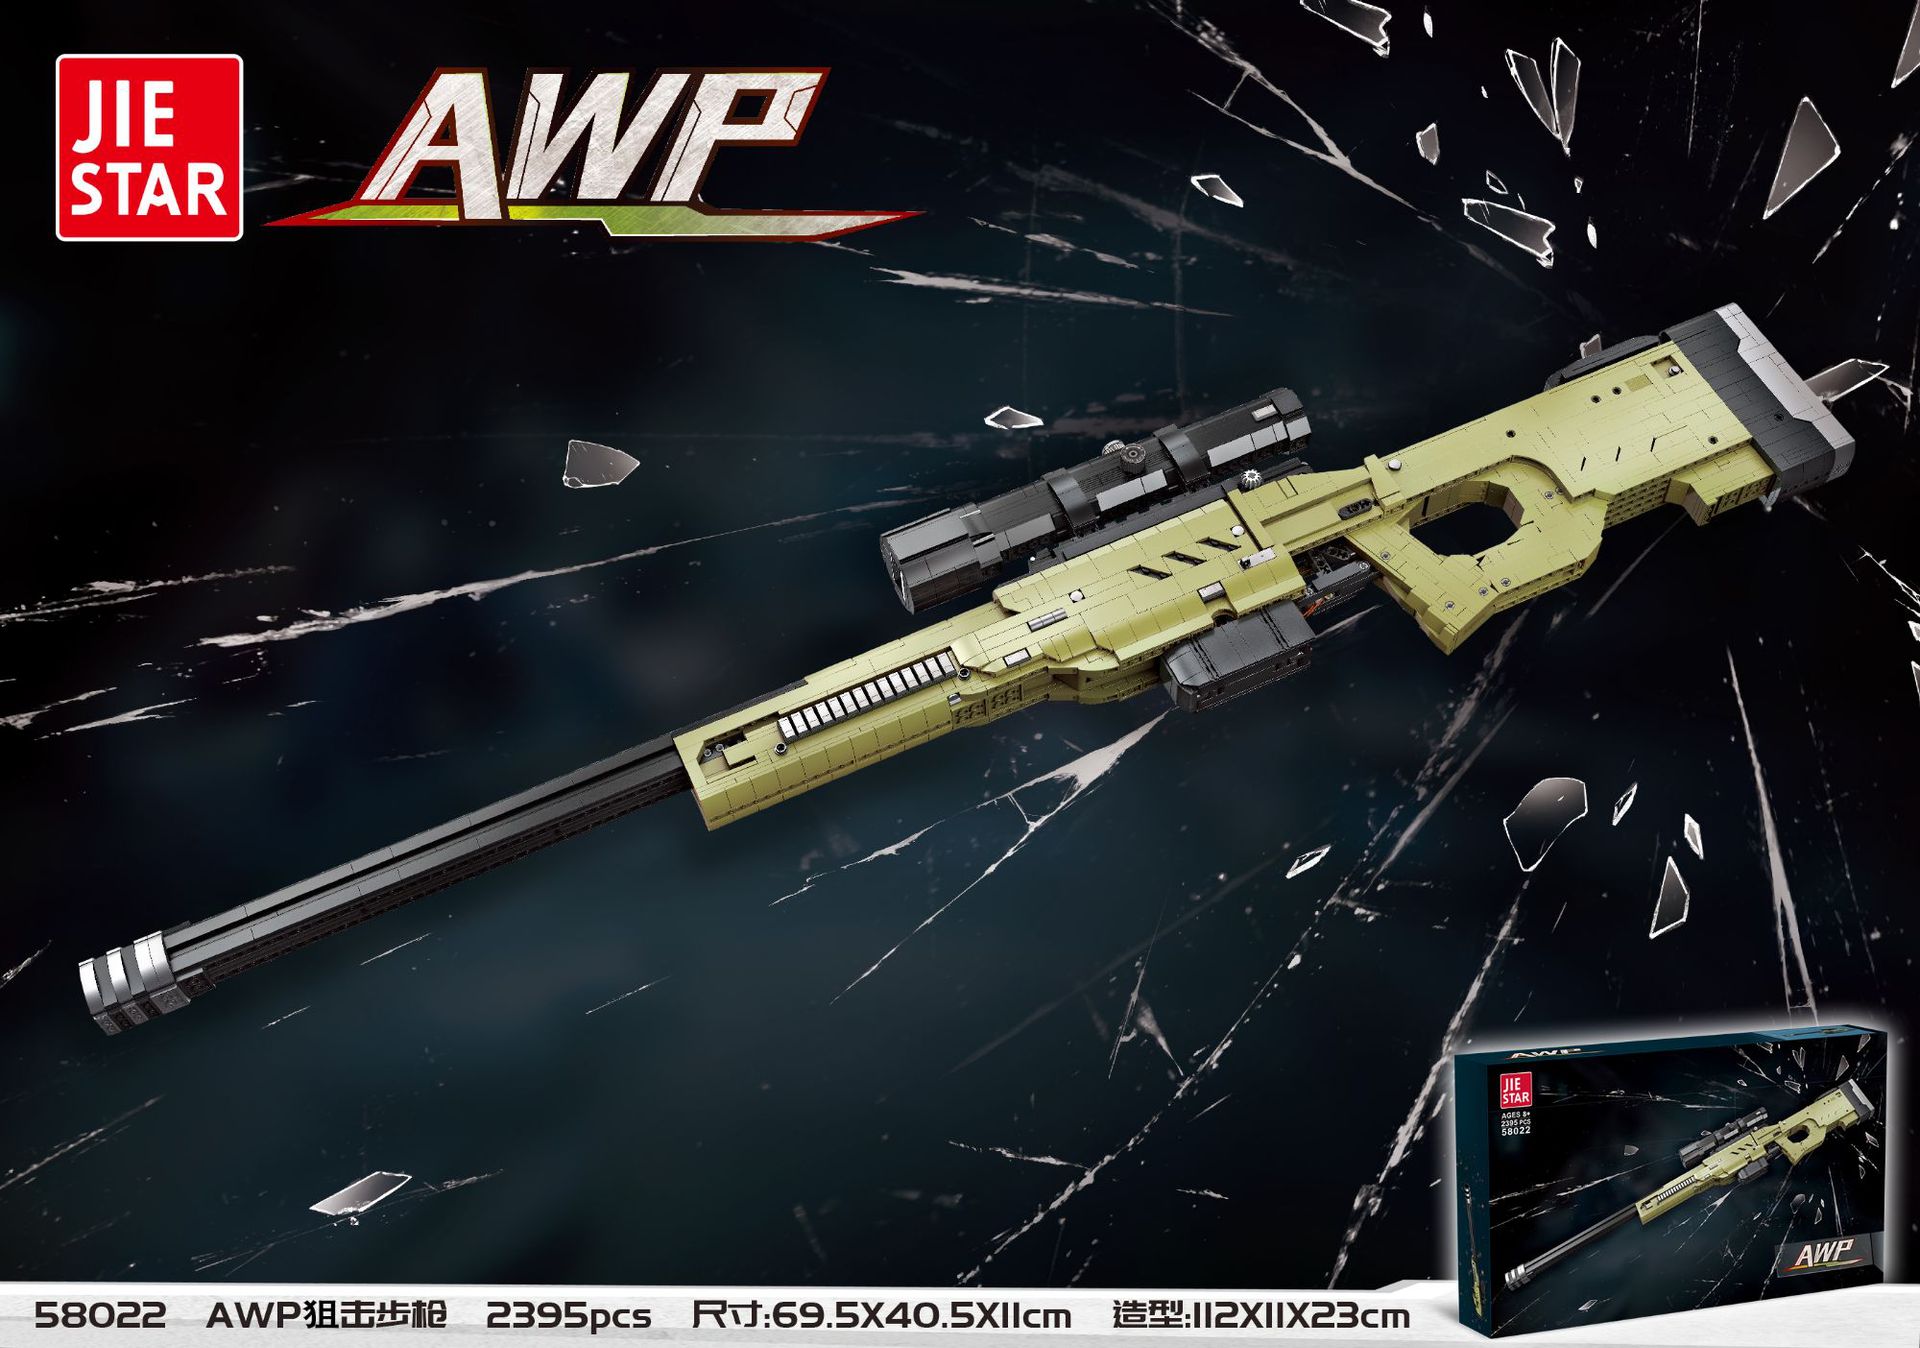 AWP Sniper Rifle JIESTAR 58022